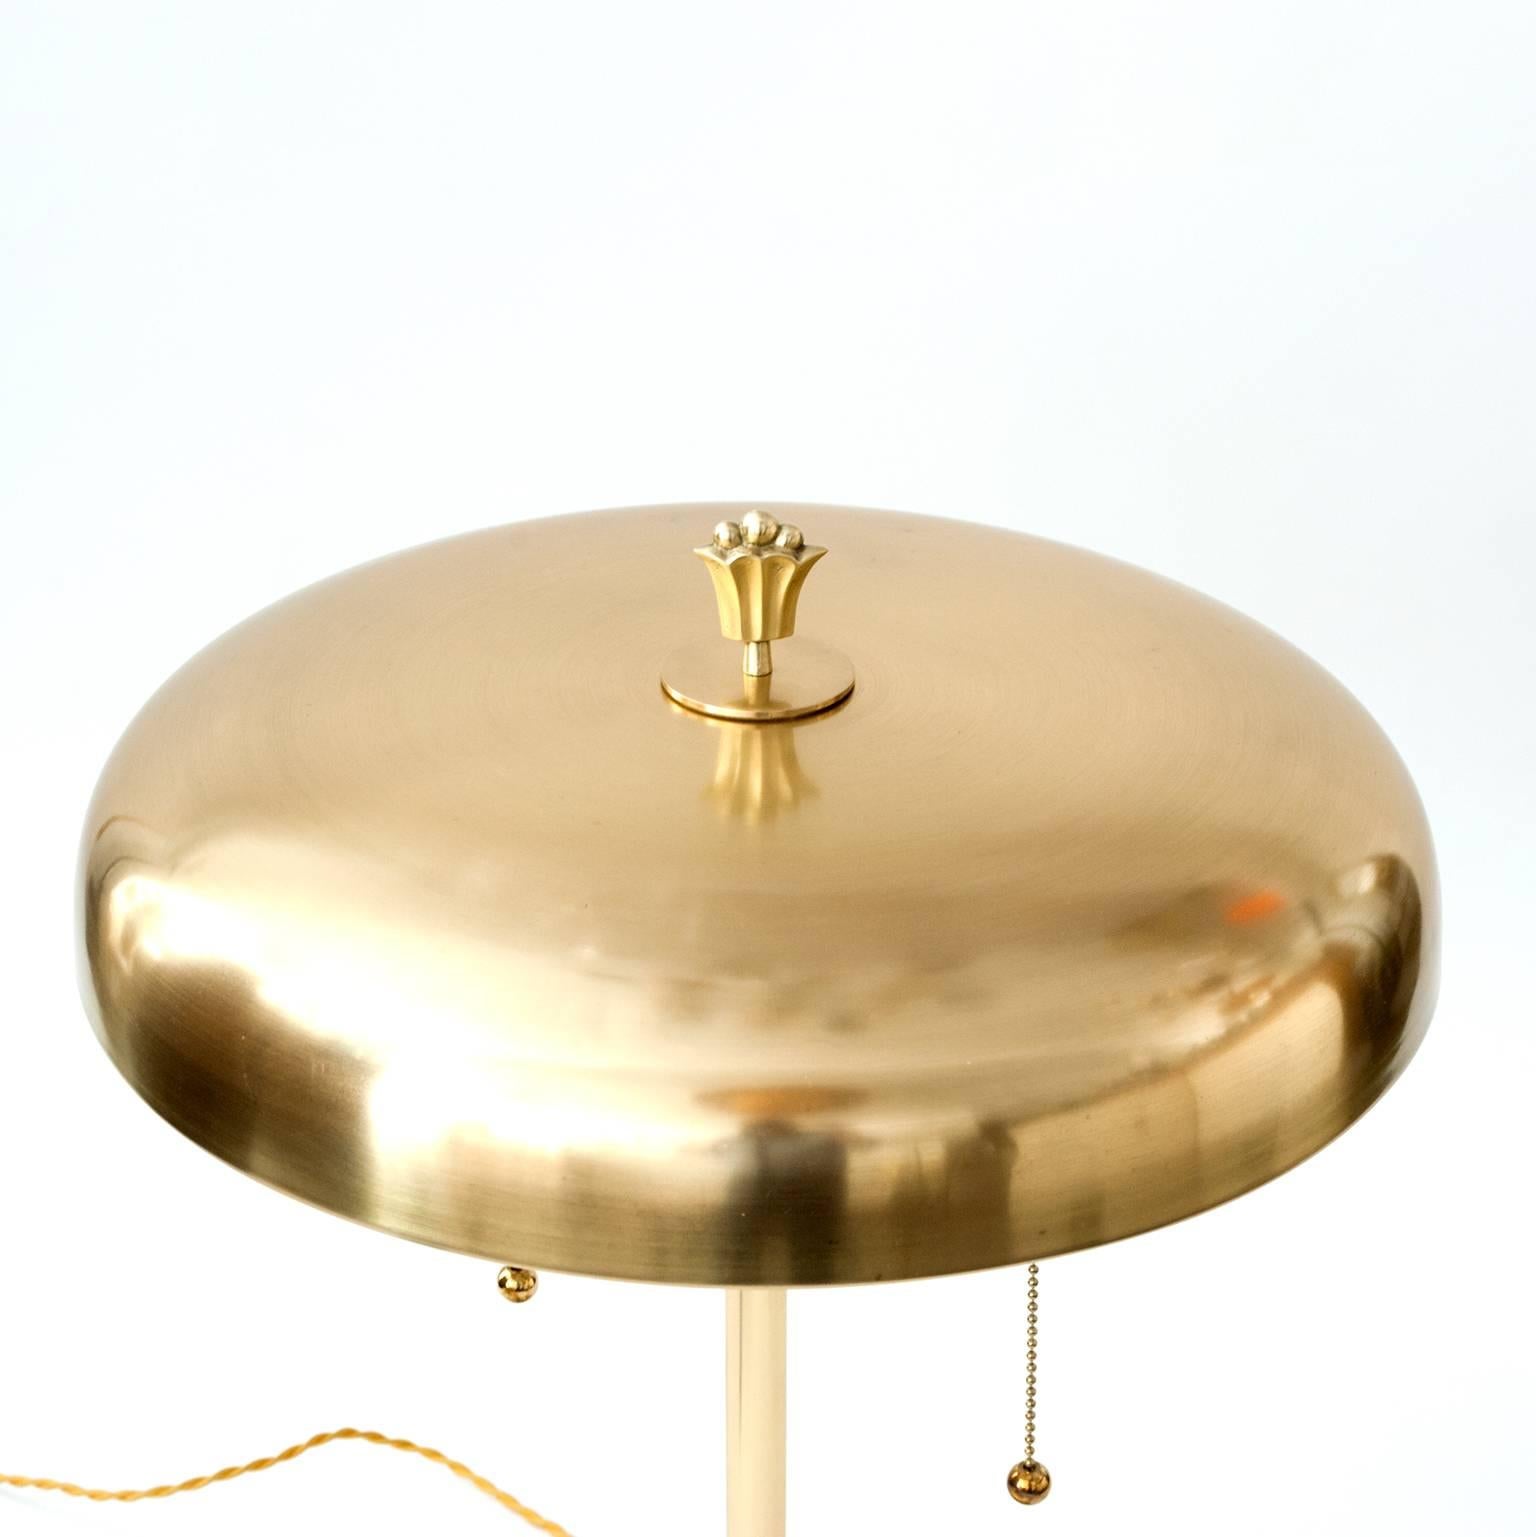 Scandinavian Elis Bergh designed Swedish Art Deco Lamp for Kosta